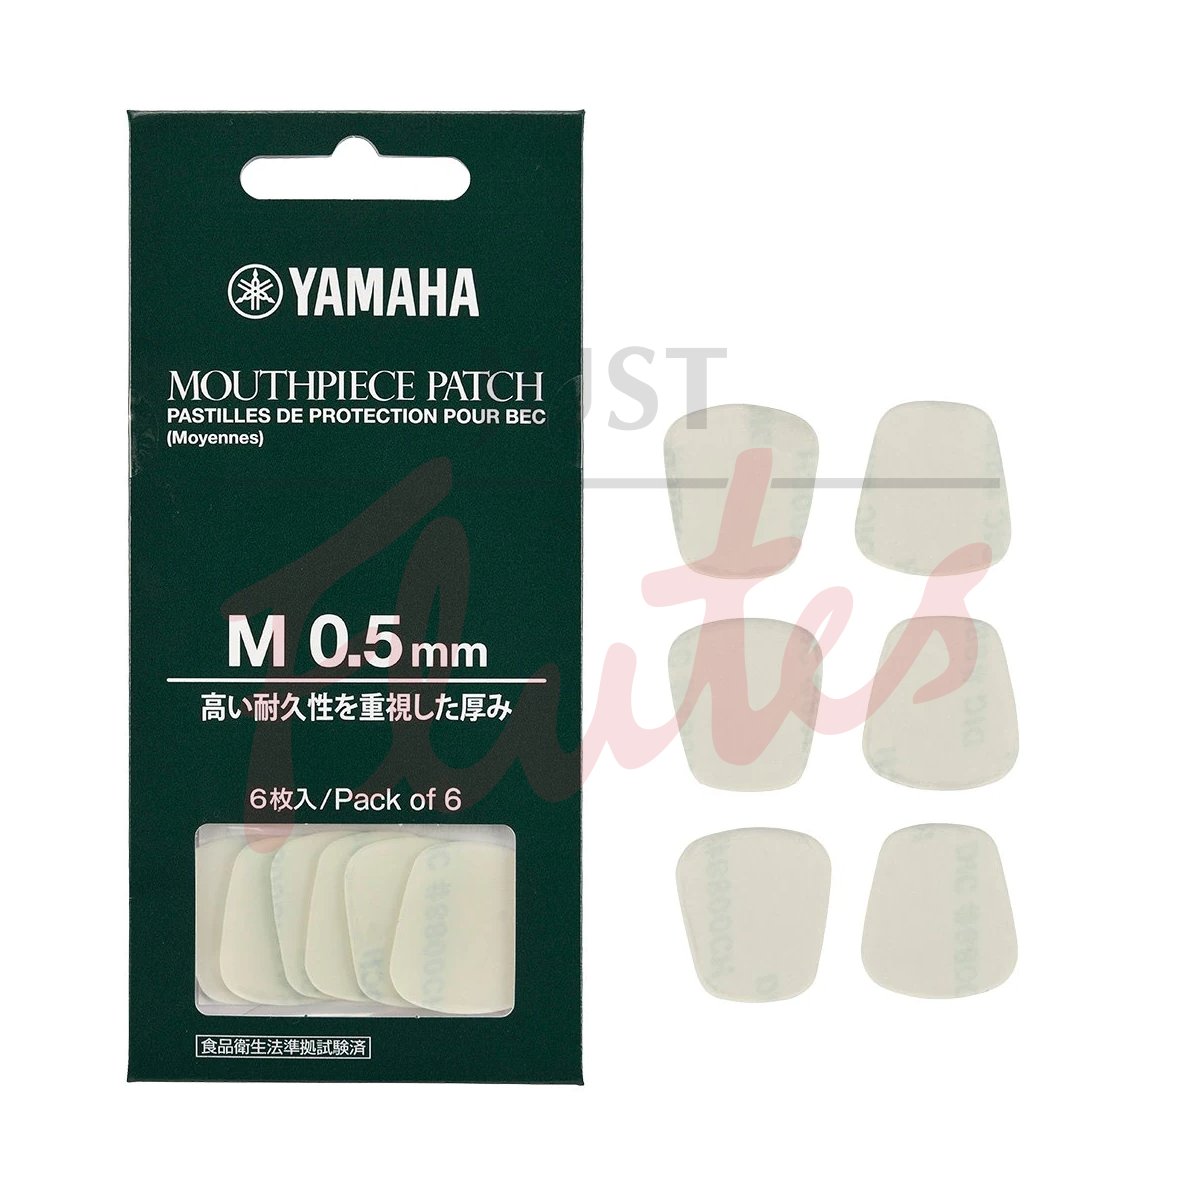 Yamaha Mouthpiece Patches, 0.5mm, Medium, 6-pack